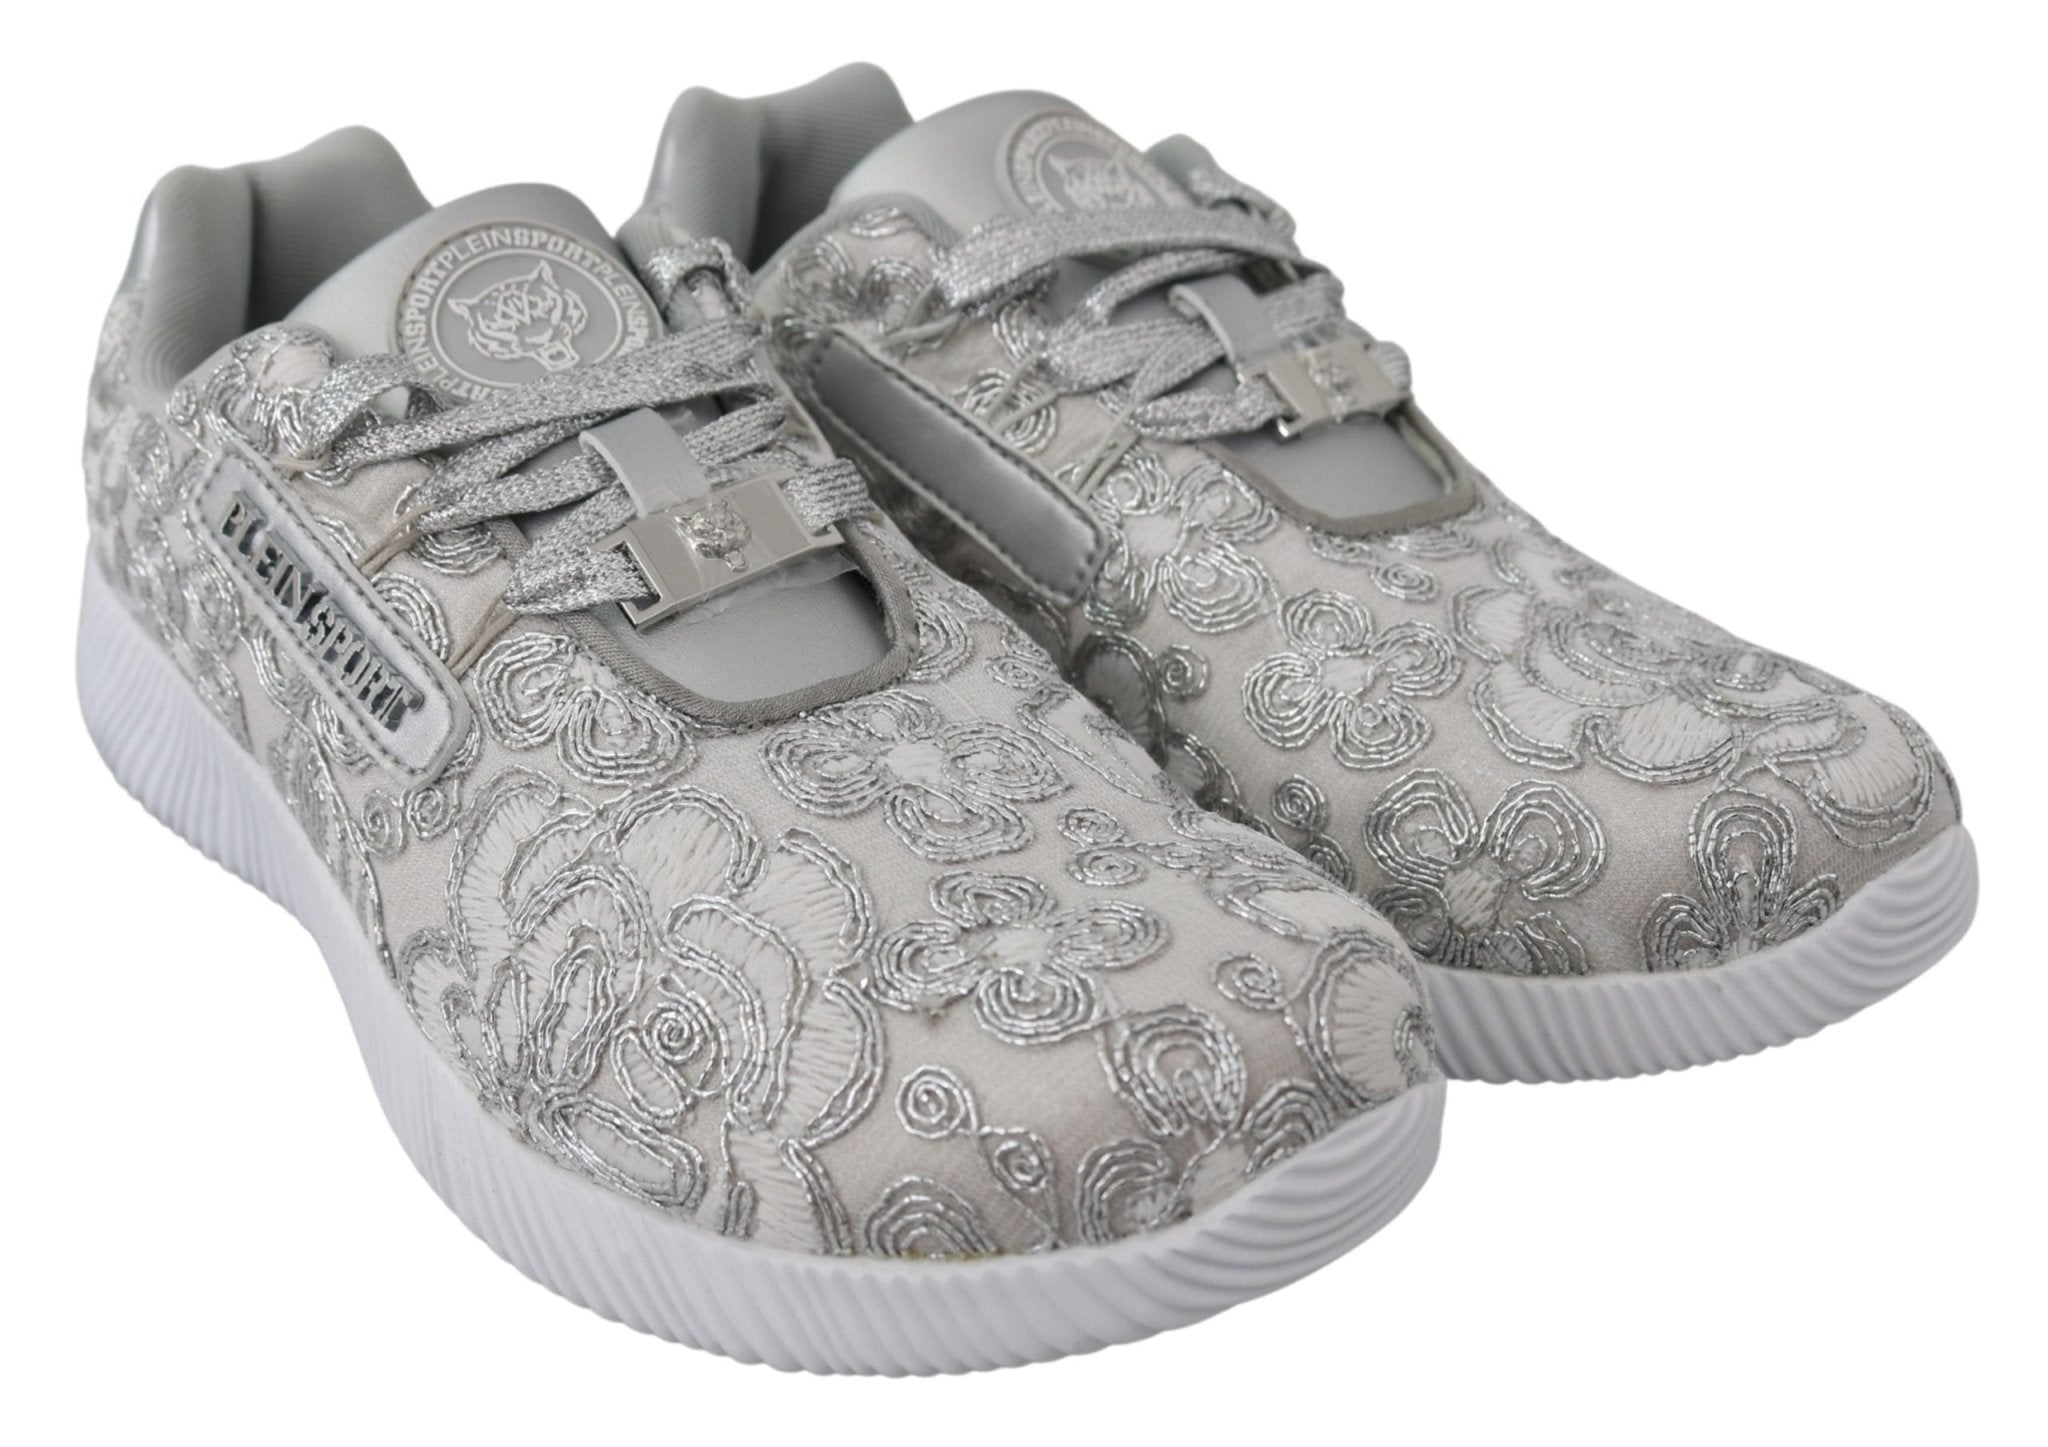 Plein Sport Silver Polyester Runner Joice Sneakers Shoes - Fizigo